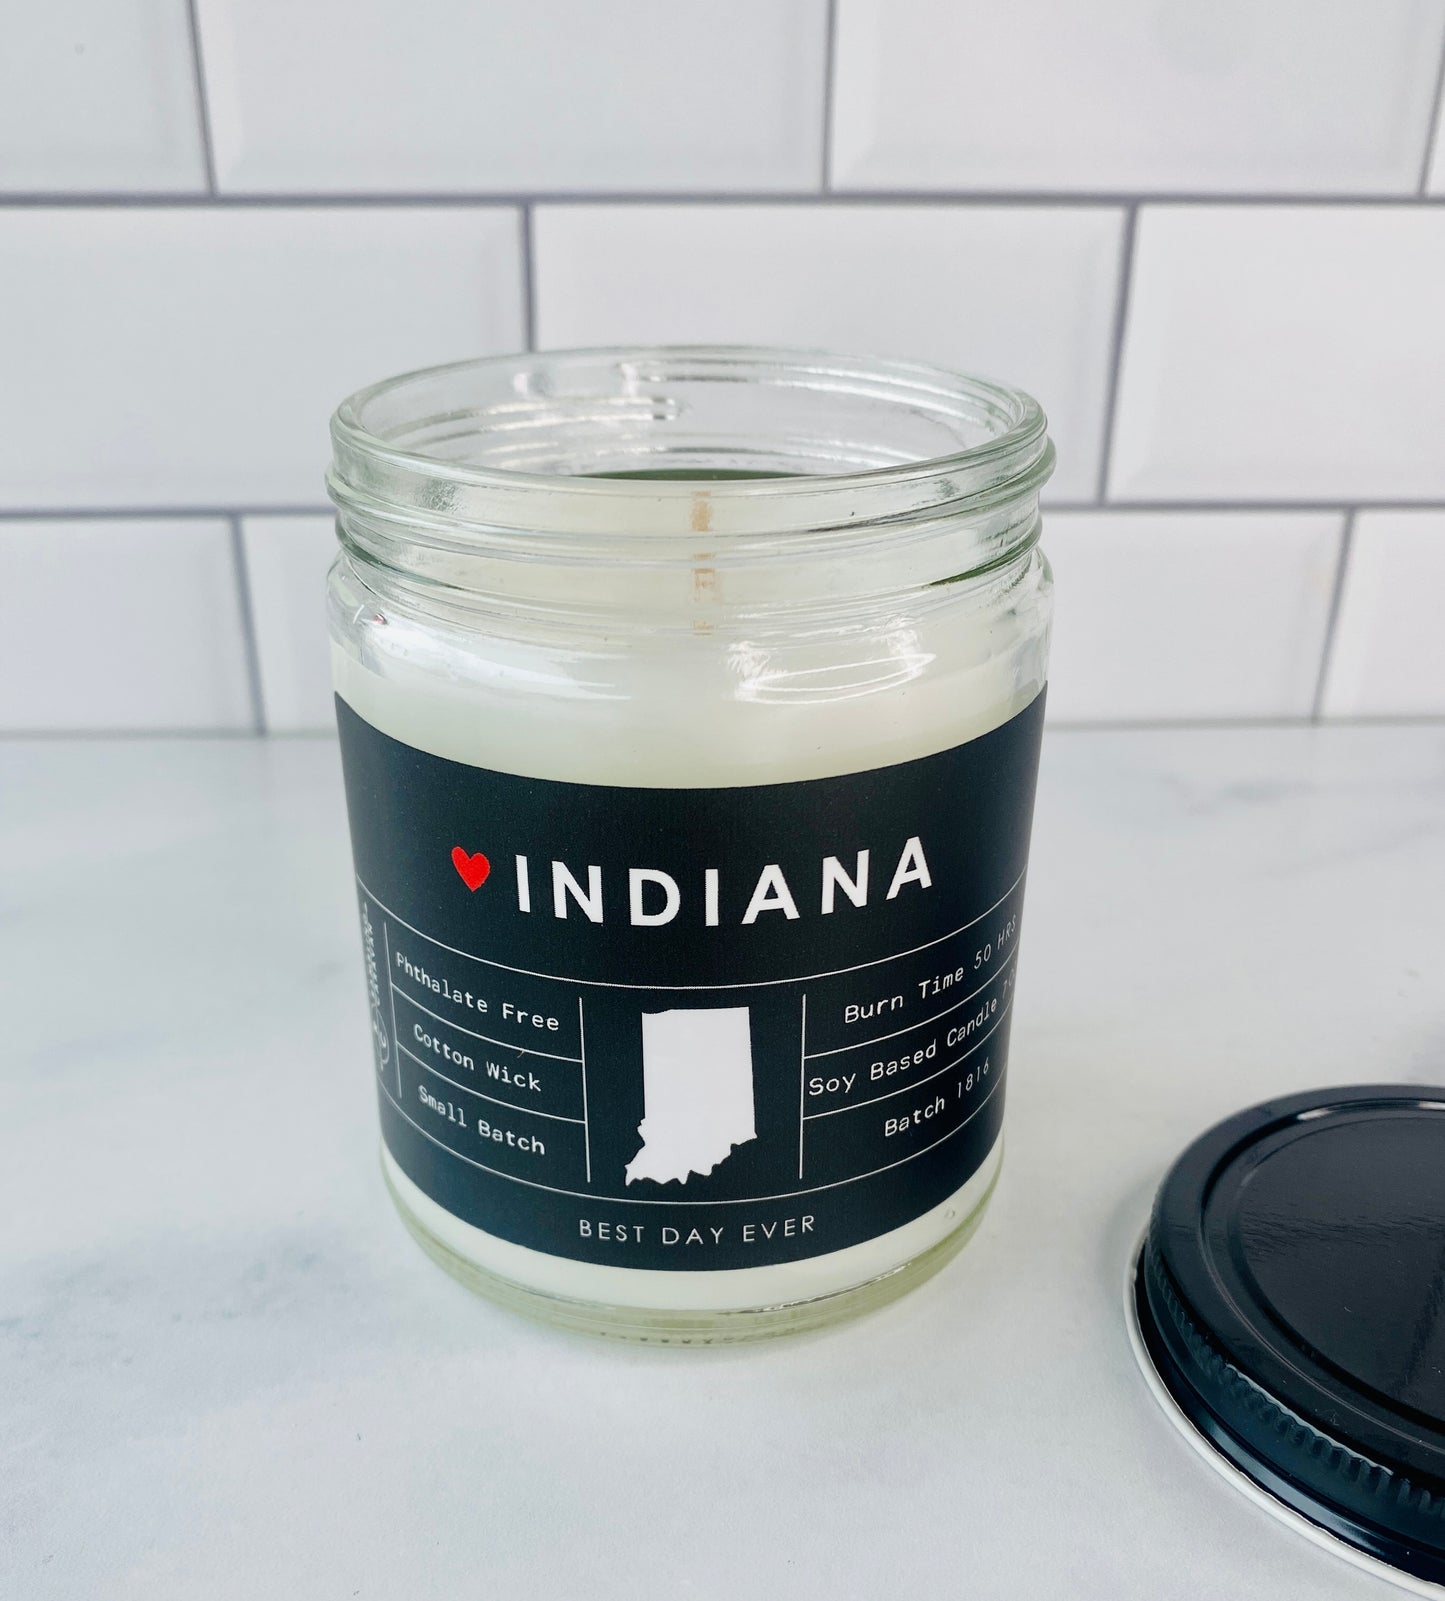 Indiana Candle